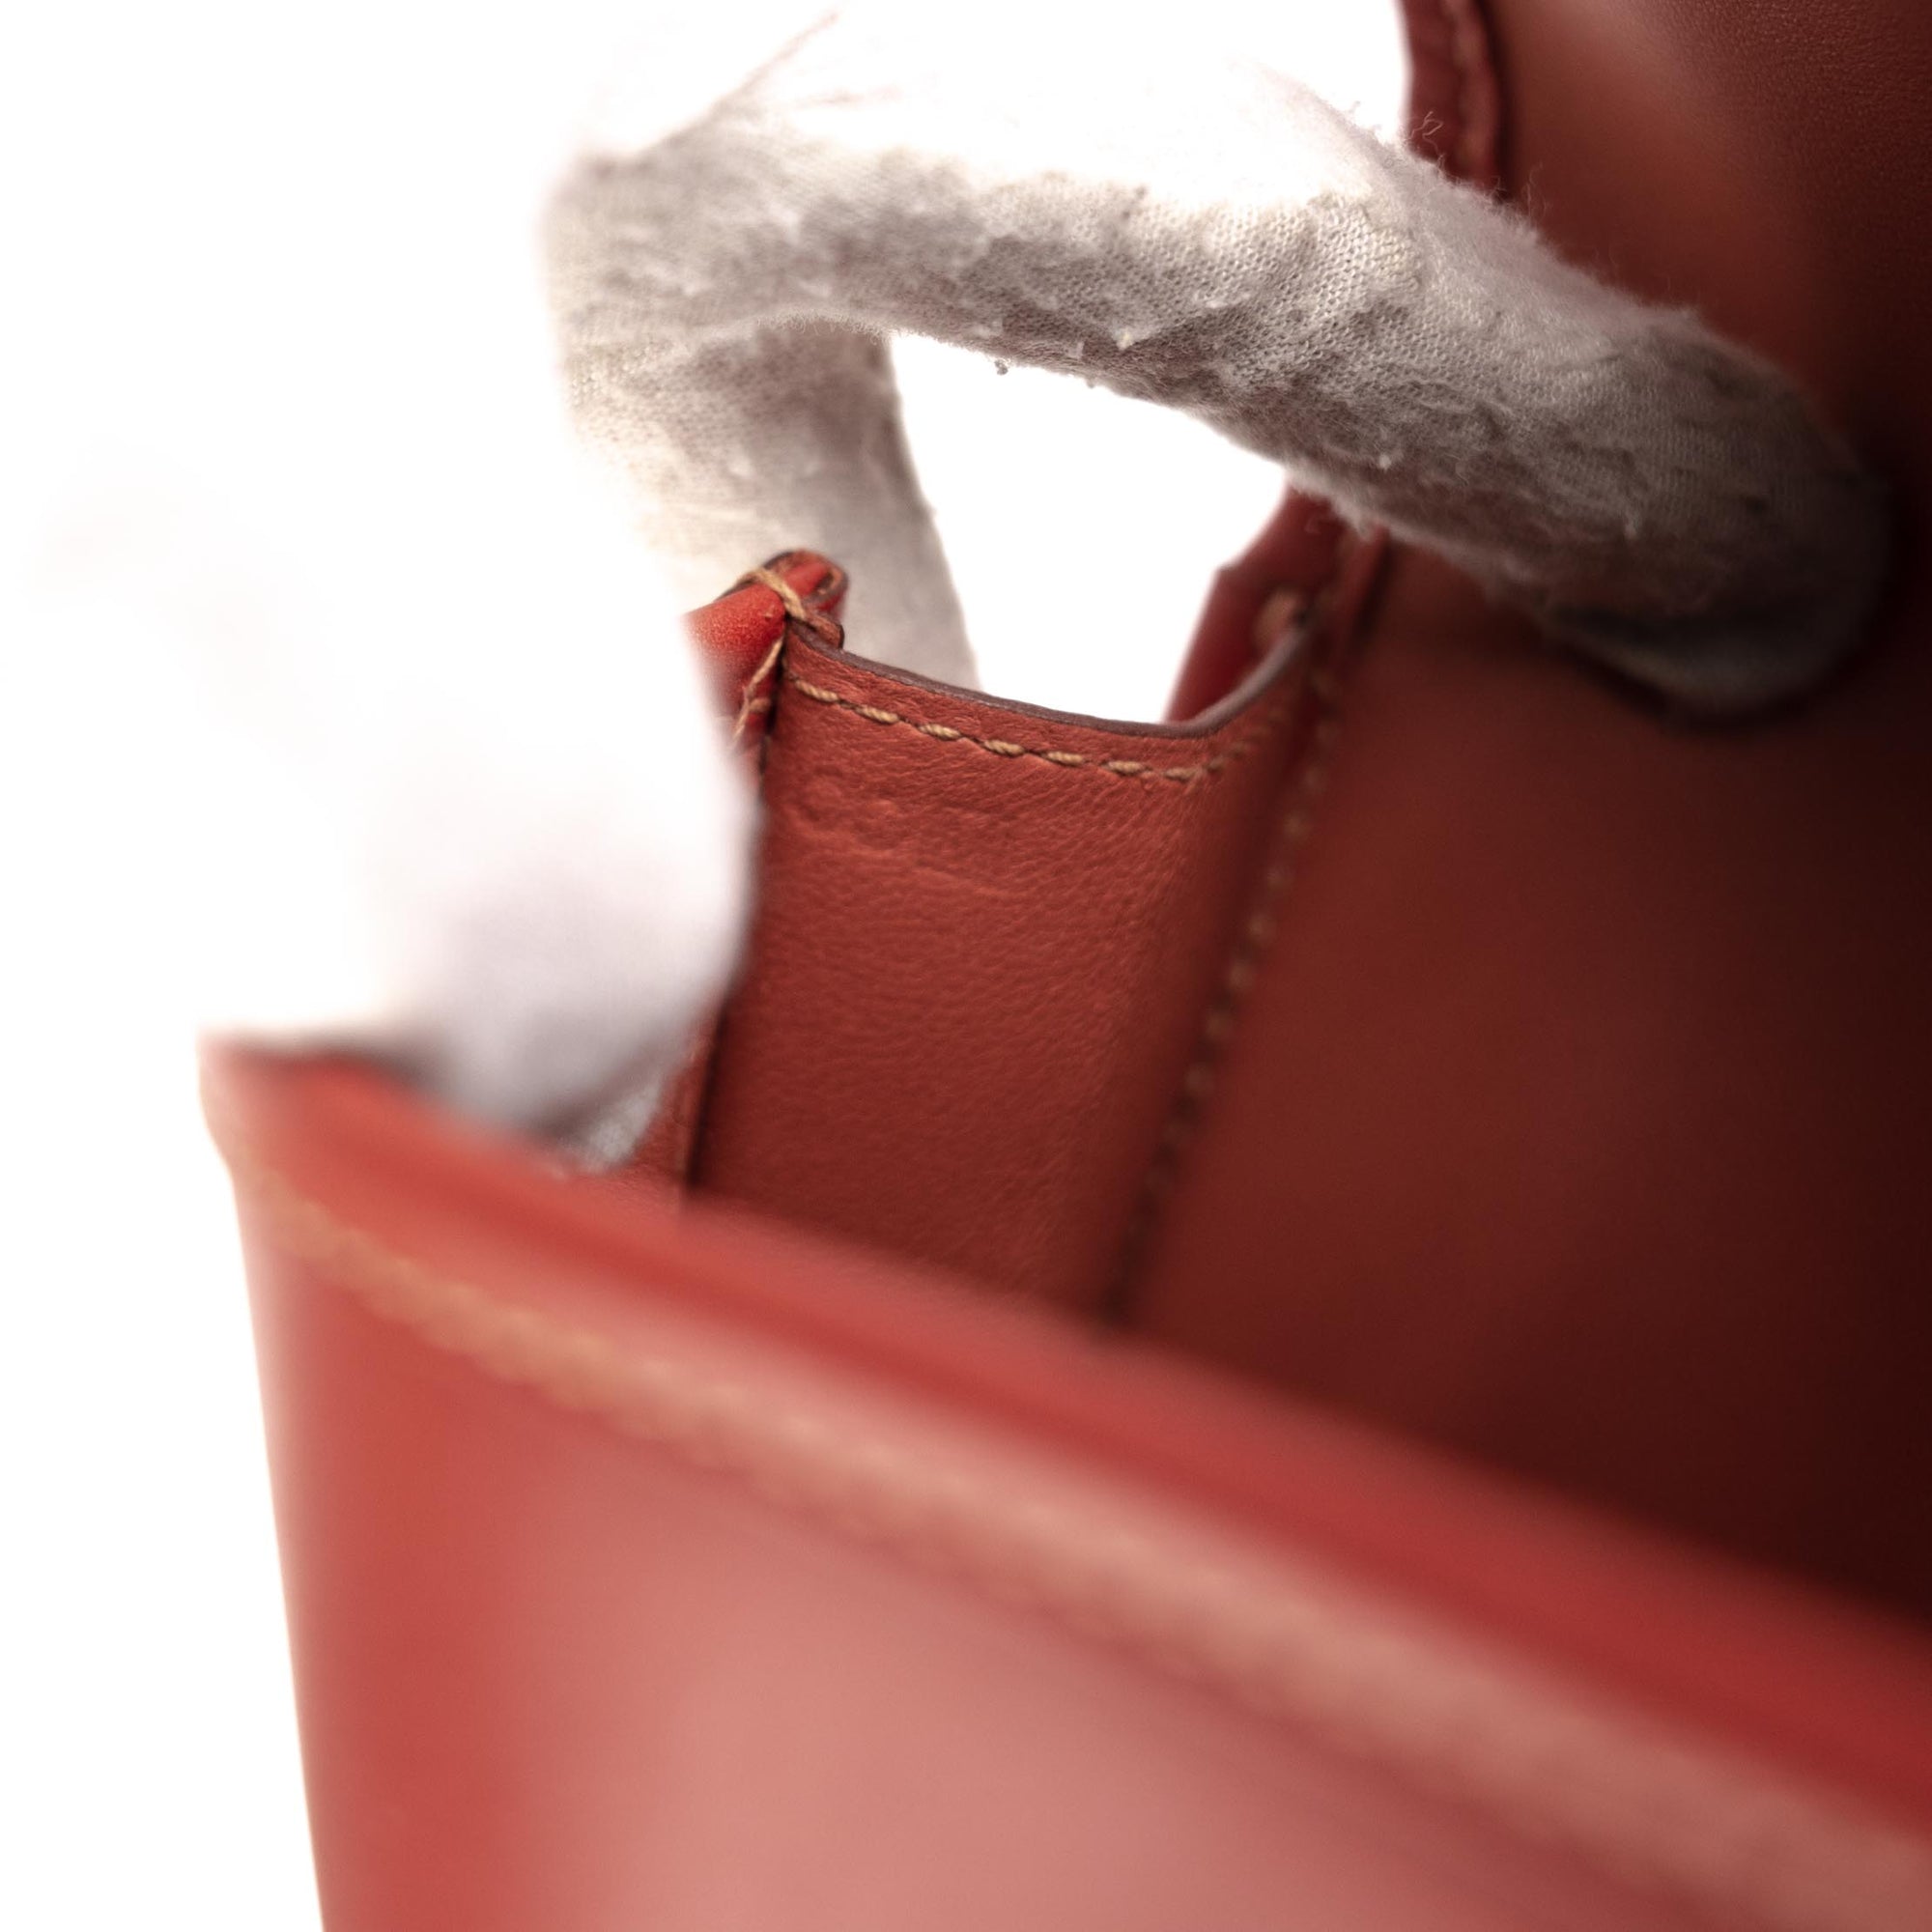 Jige leather clutch bag Hermès Orange in Leather - 35309447